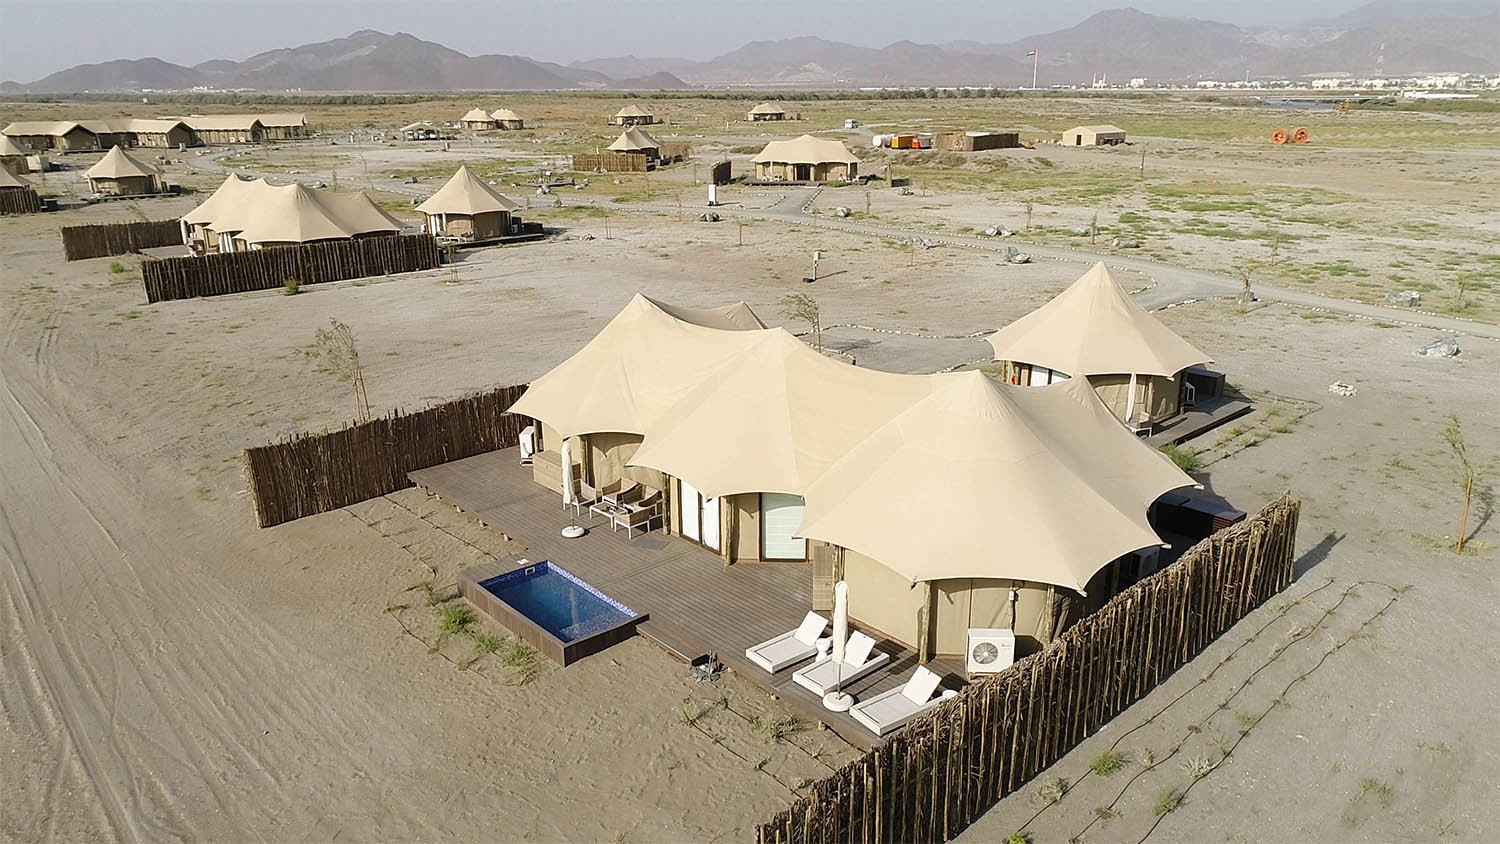 Aerial of glamping tent cabin resort in the desert